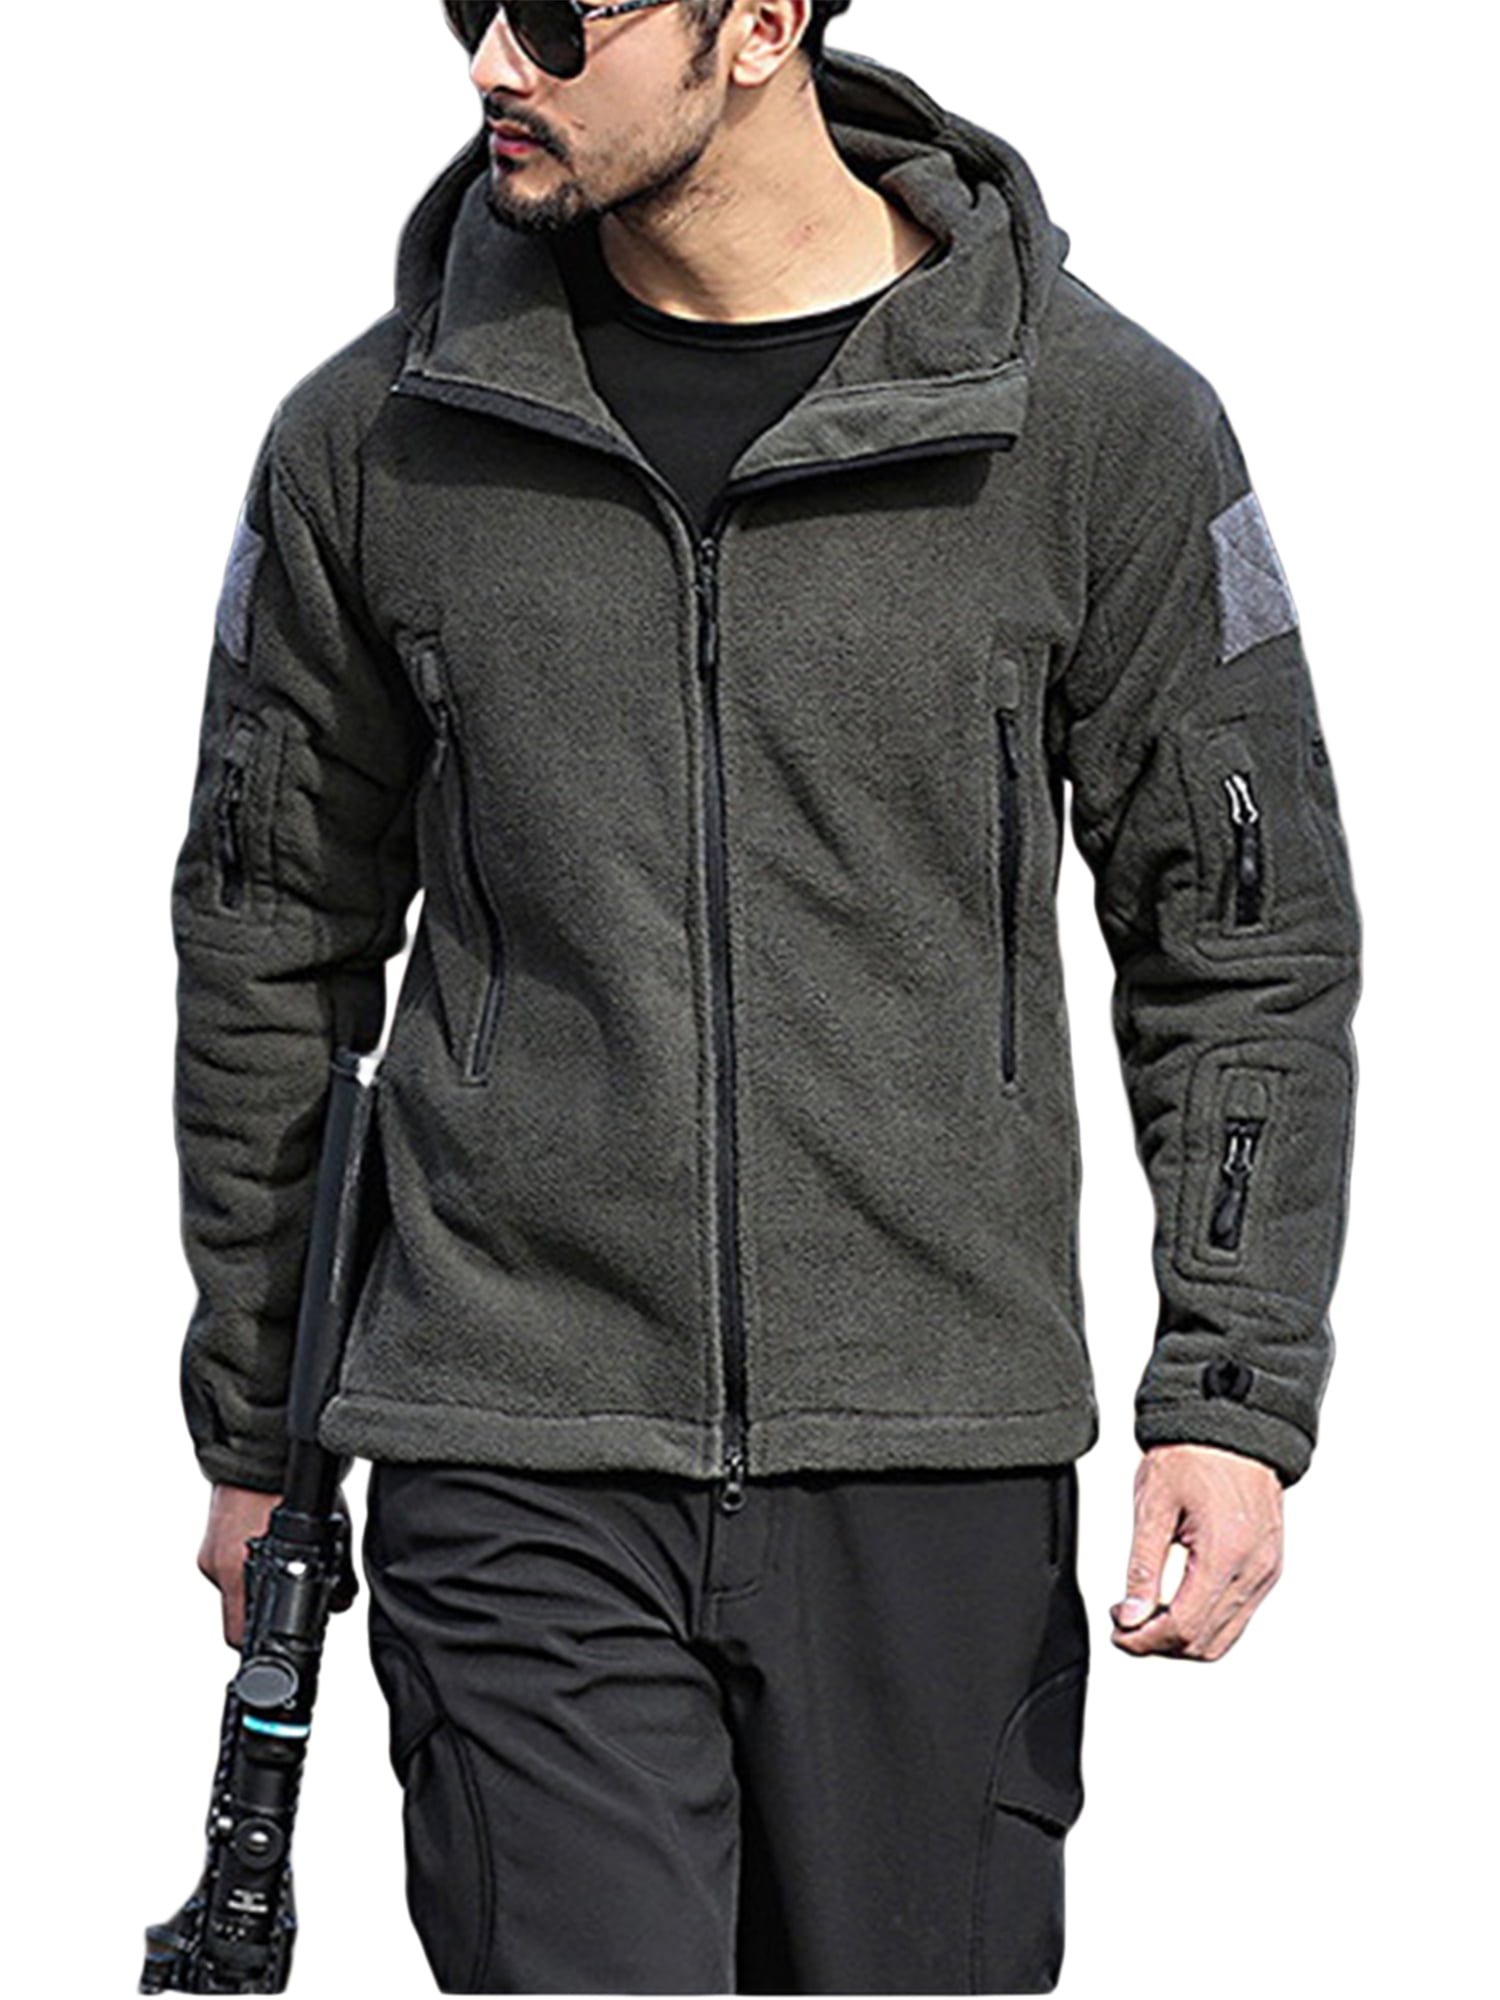 CRYSULLY Men's Military Tactical Sport Warm Fleece Hooded Outdoor Adventure Jacket Coats TJ2 